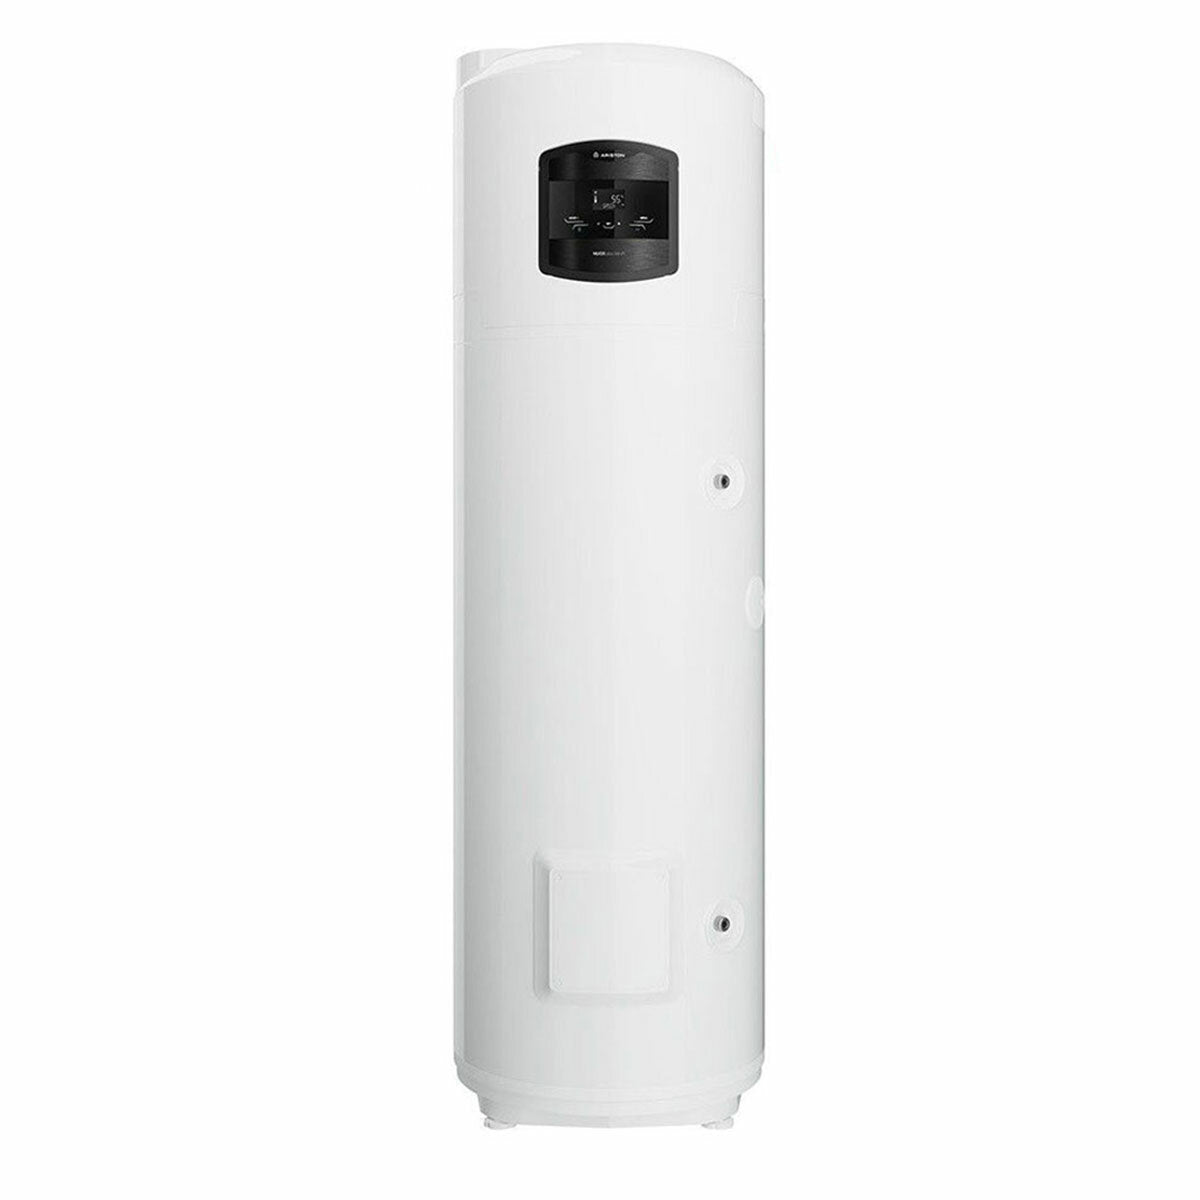 Ariston Nuos PLUS Wi-Fi heat pump water heater 200 liters A+